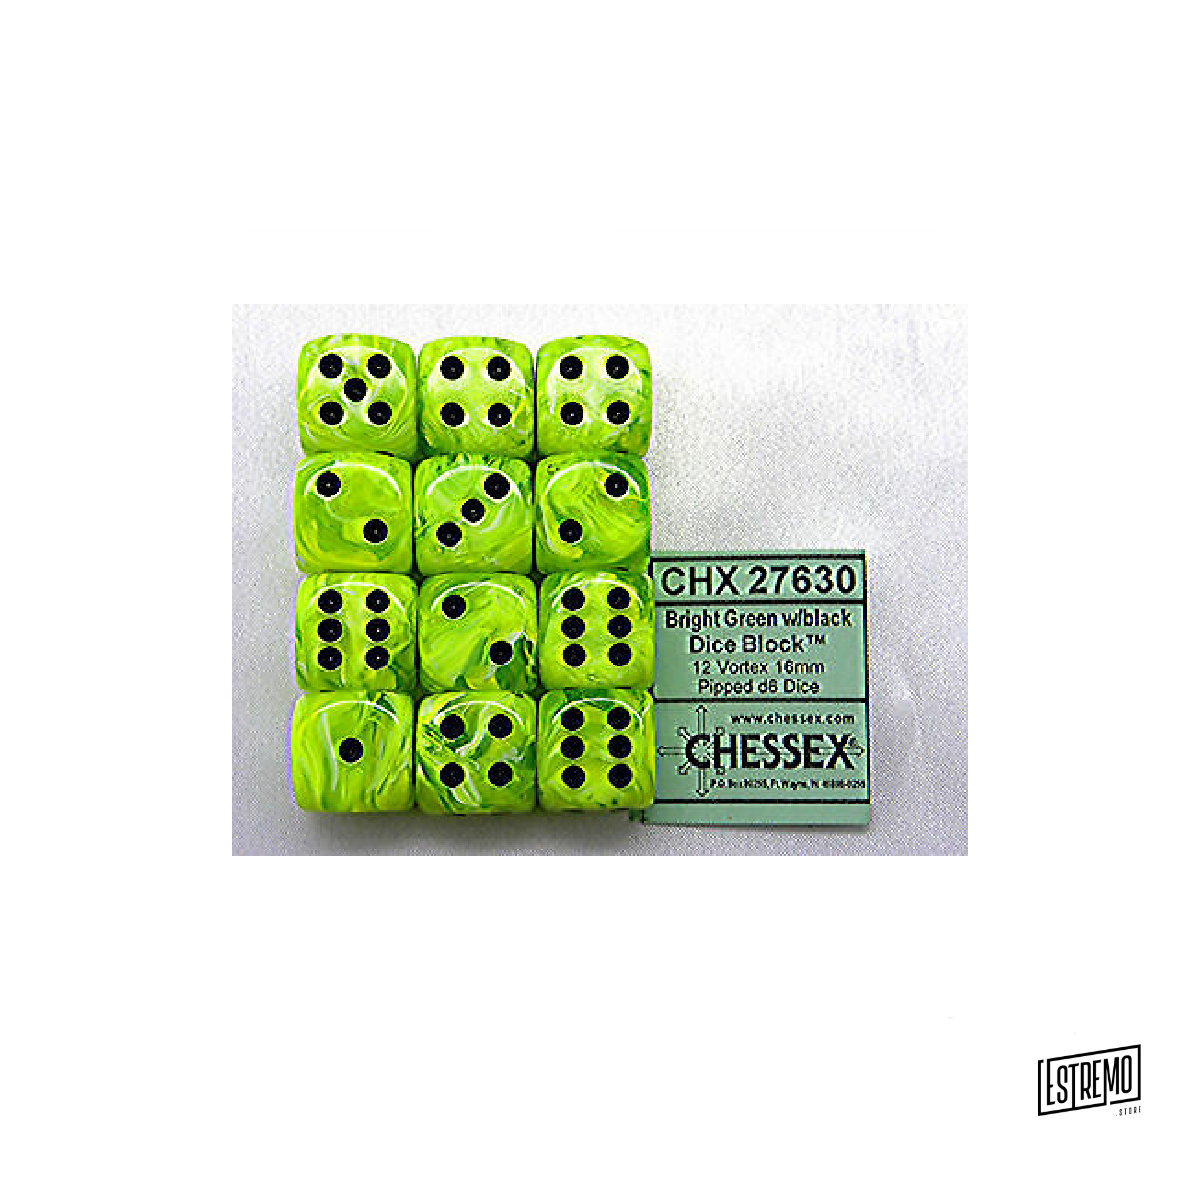 CHESSEX 16MM D6 WITH PIPS DICE BLOCKS (12 DICE) - VORTEX BRIGHT GREEN W/BLACK